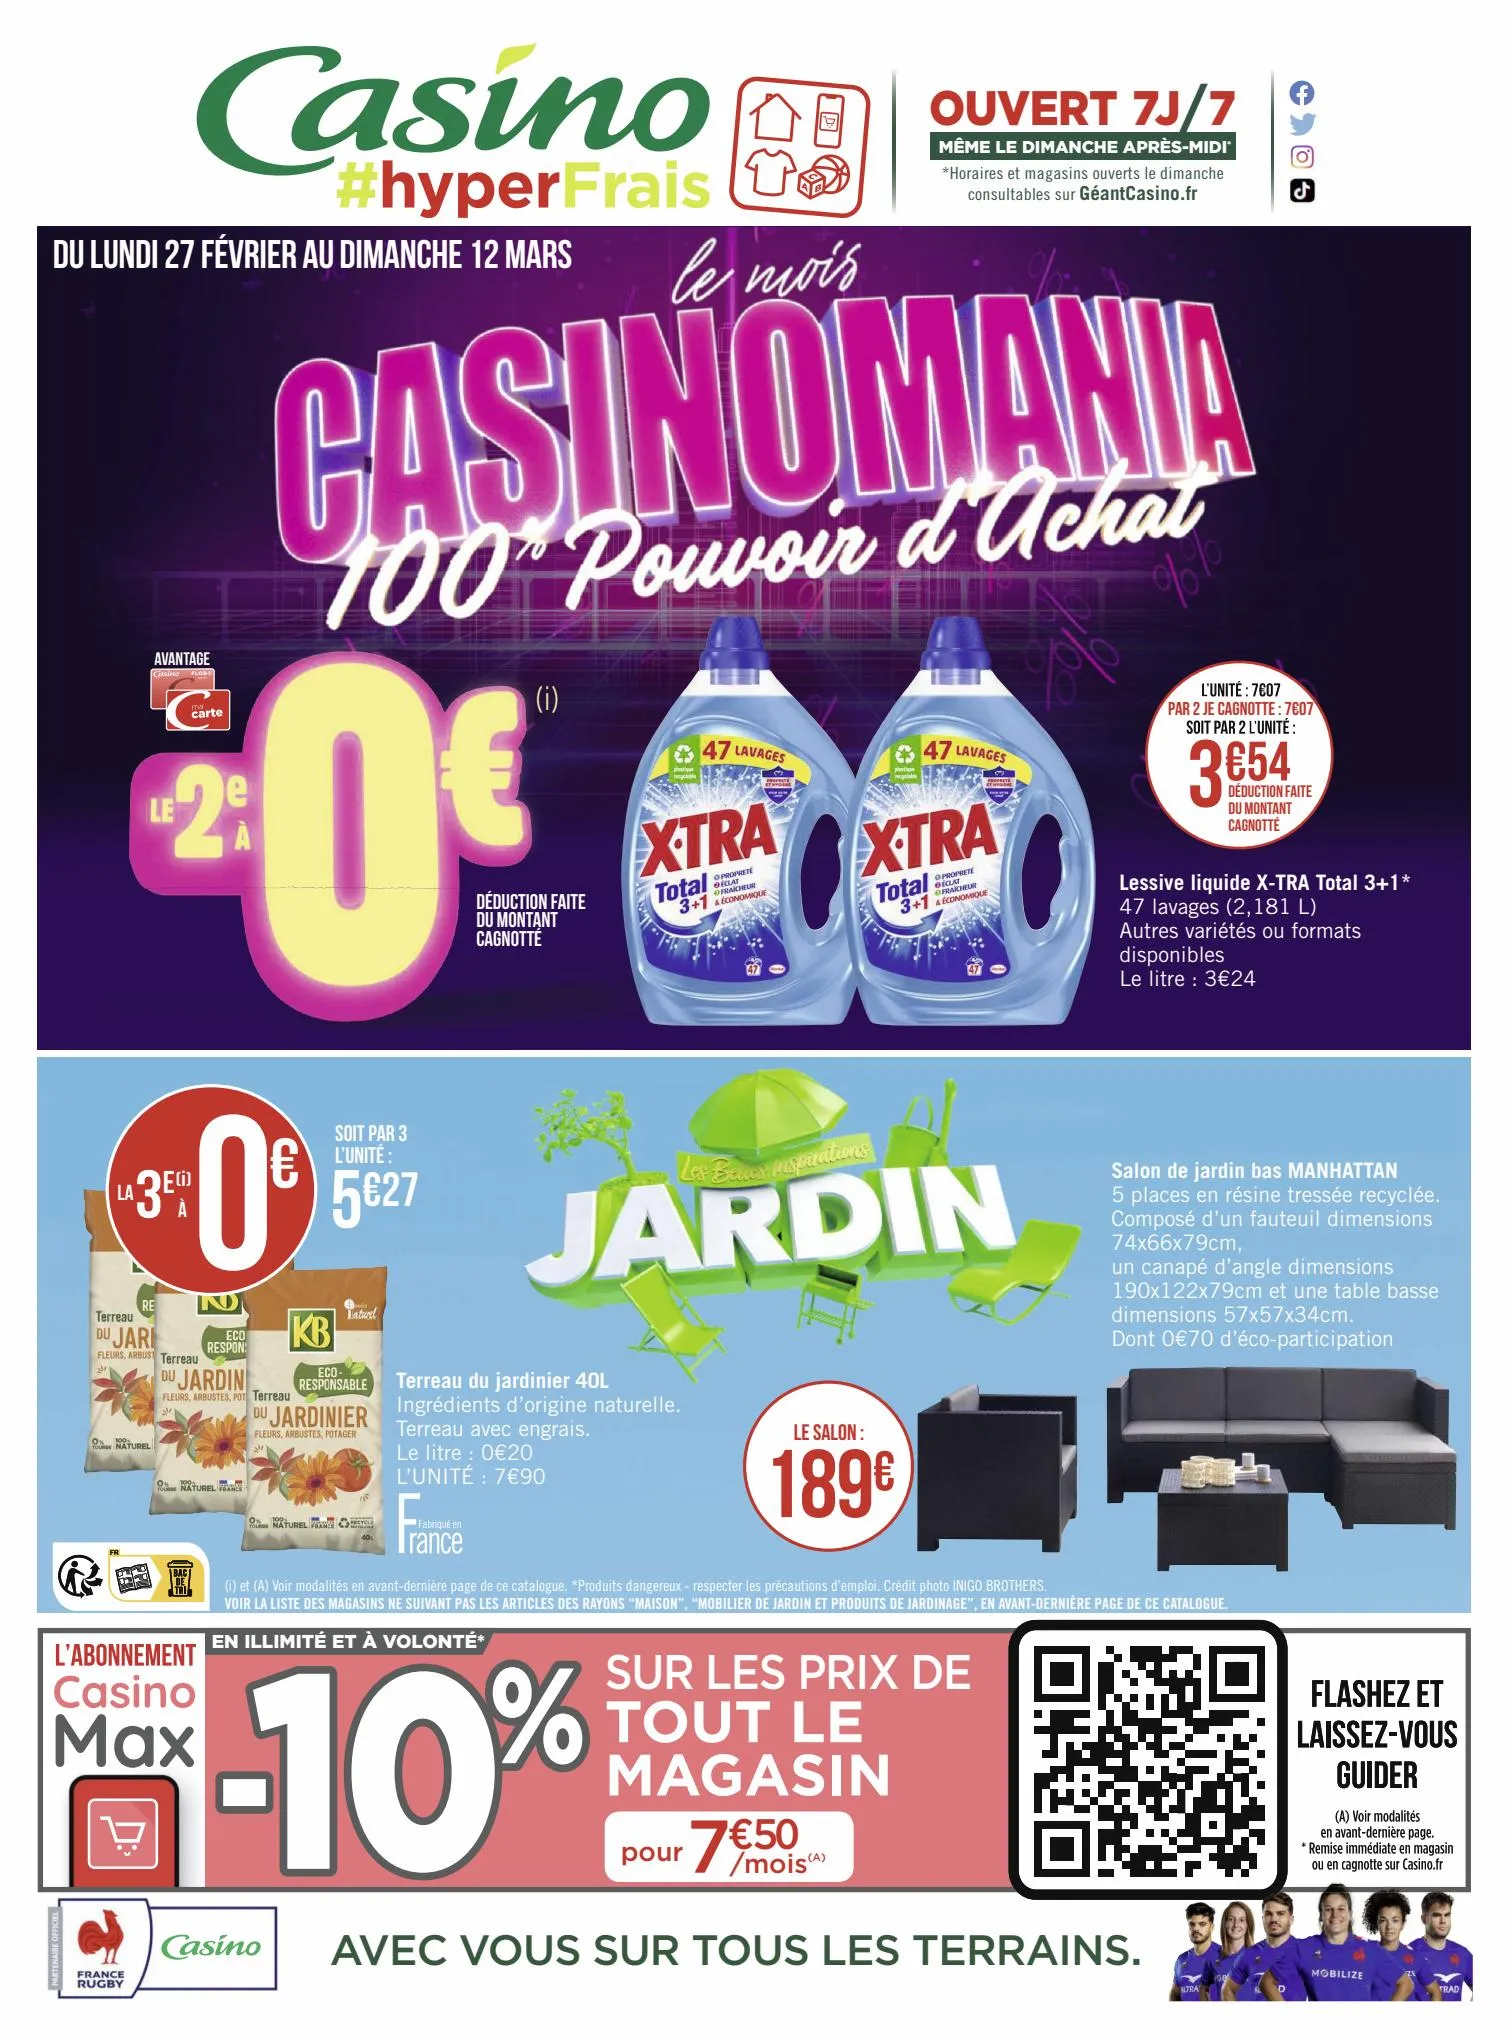 Catalogue Catalogue Géant Casino, page 00084